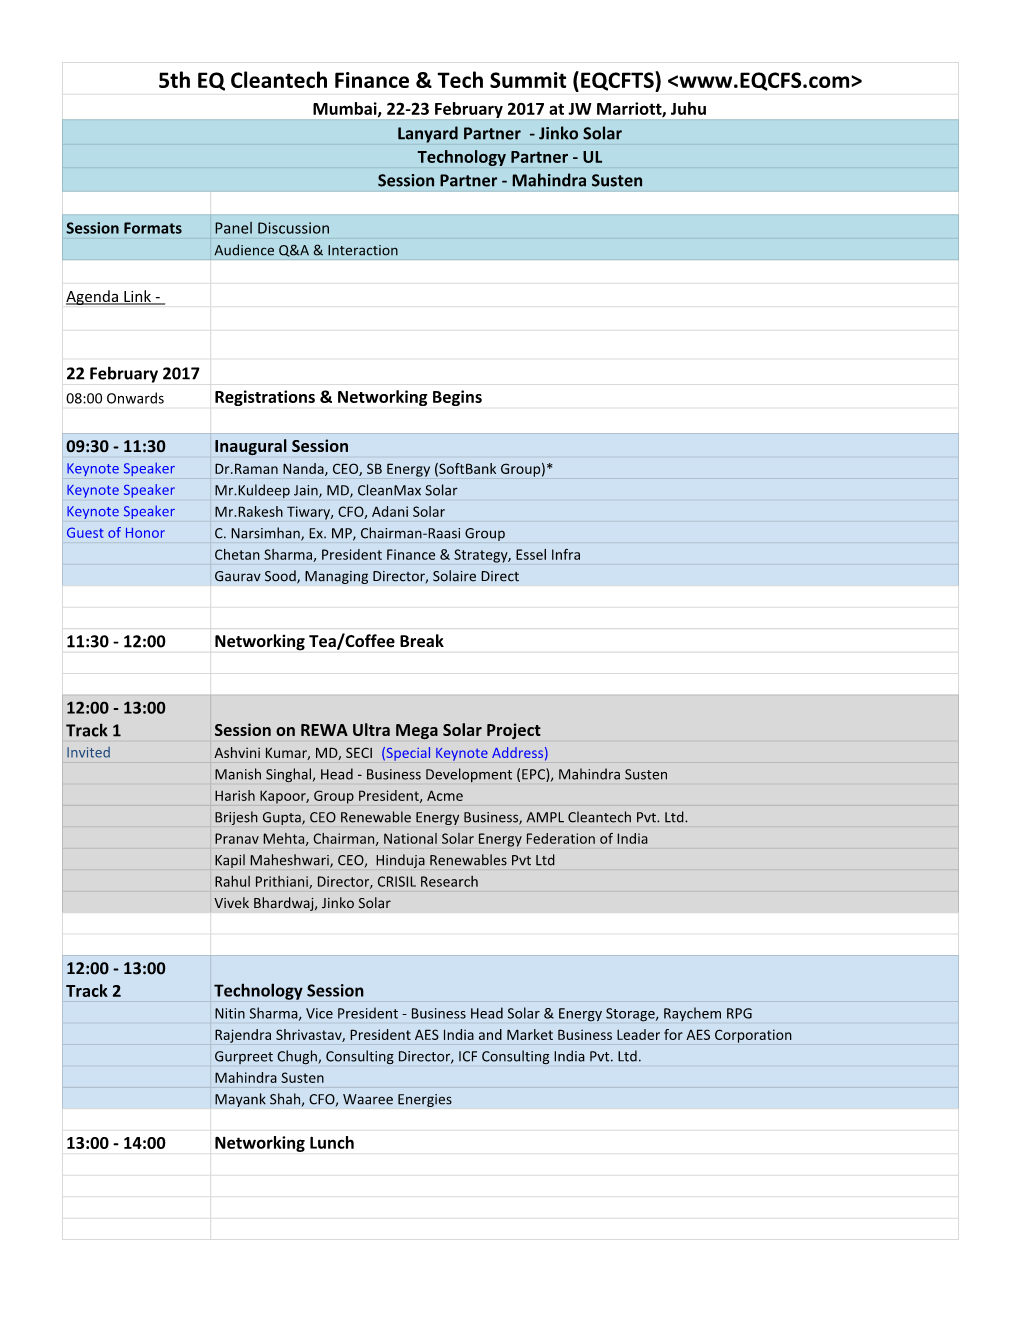 5Th EQ Cleantech Finance & Tech Summit (EQCFTS)